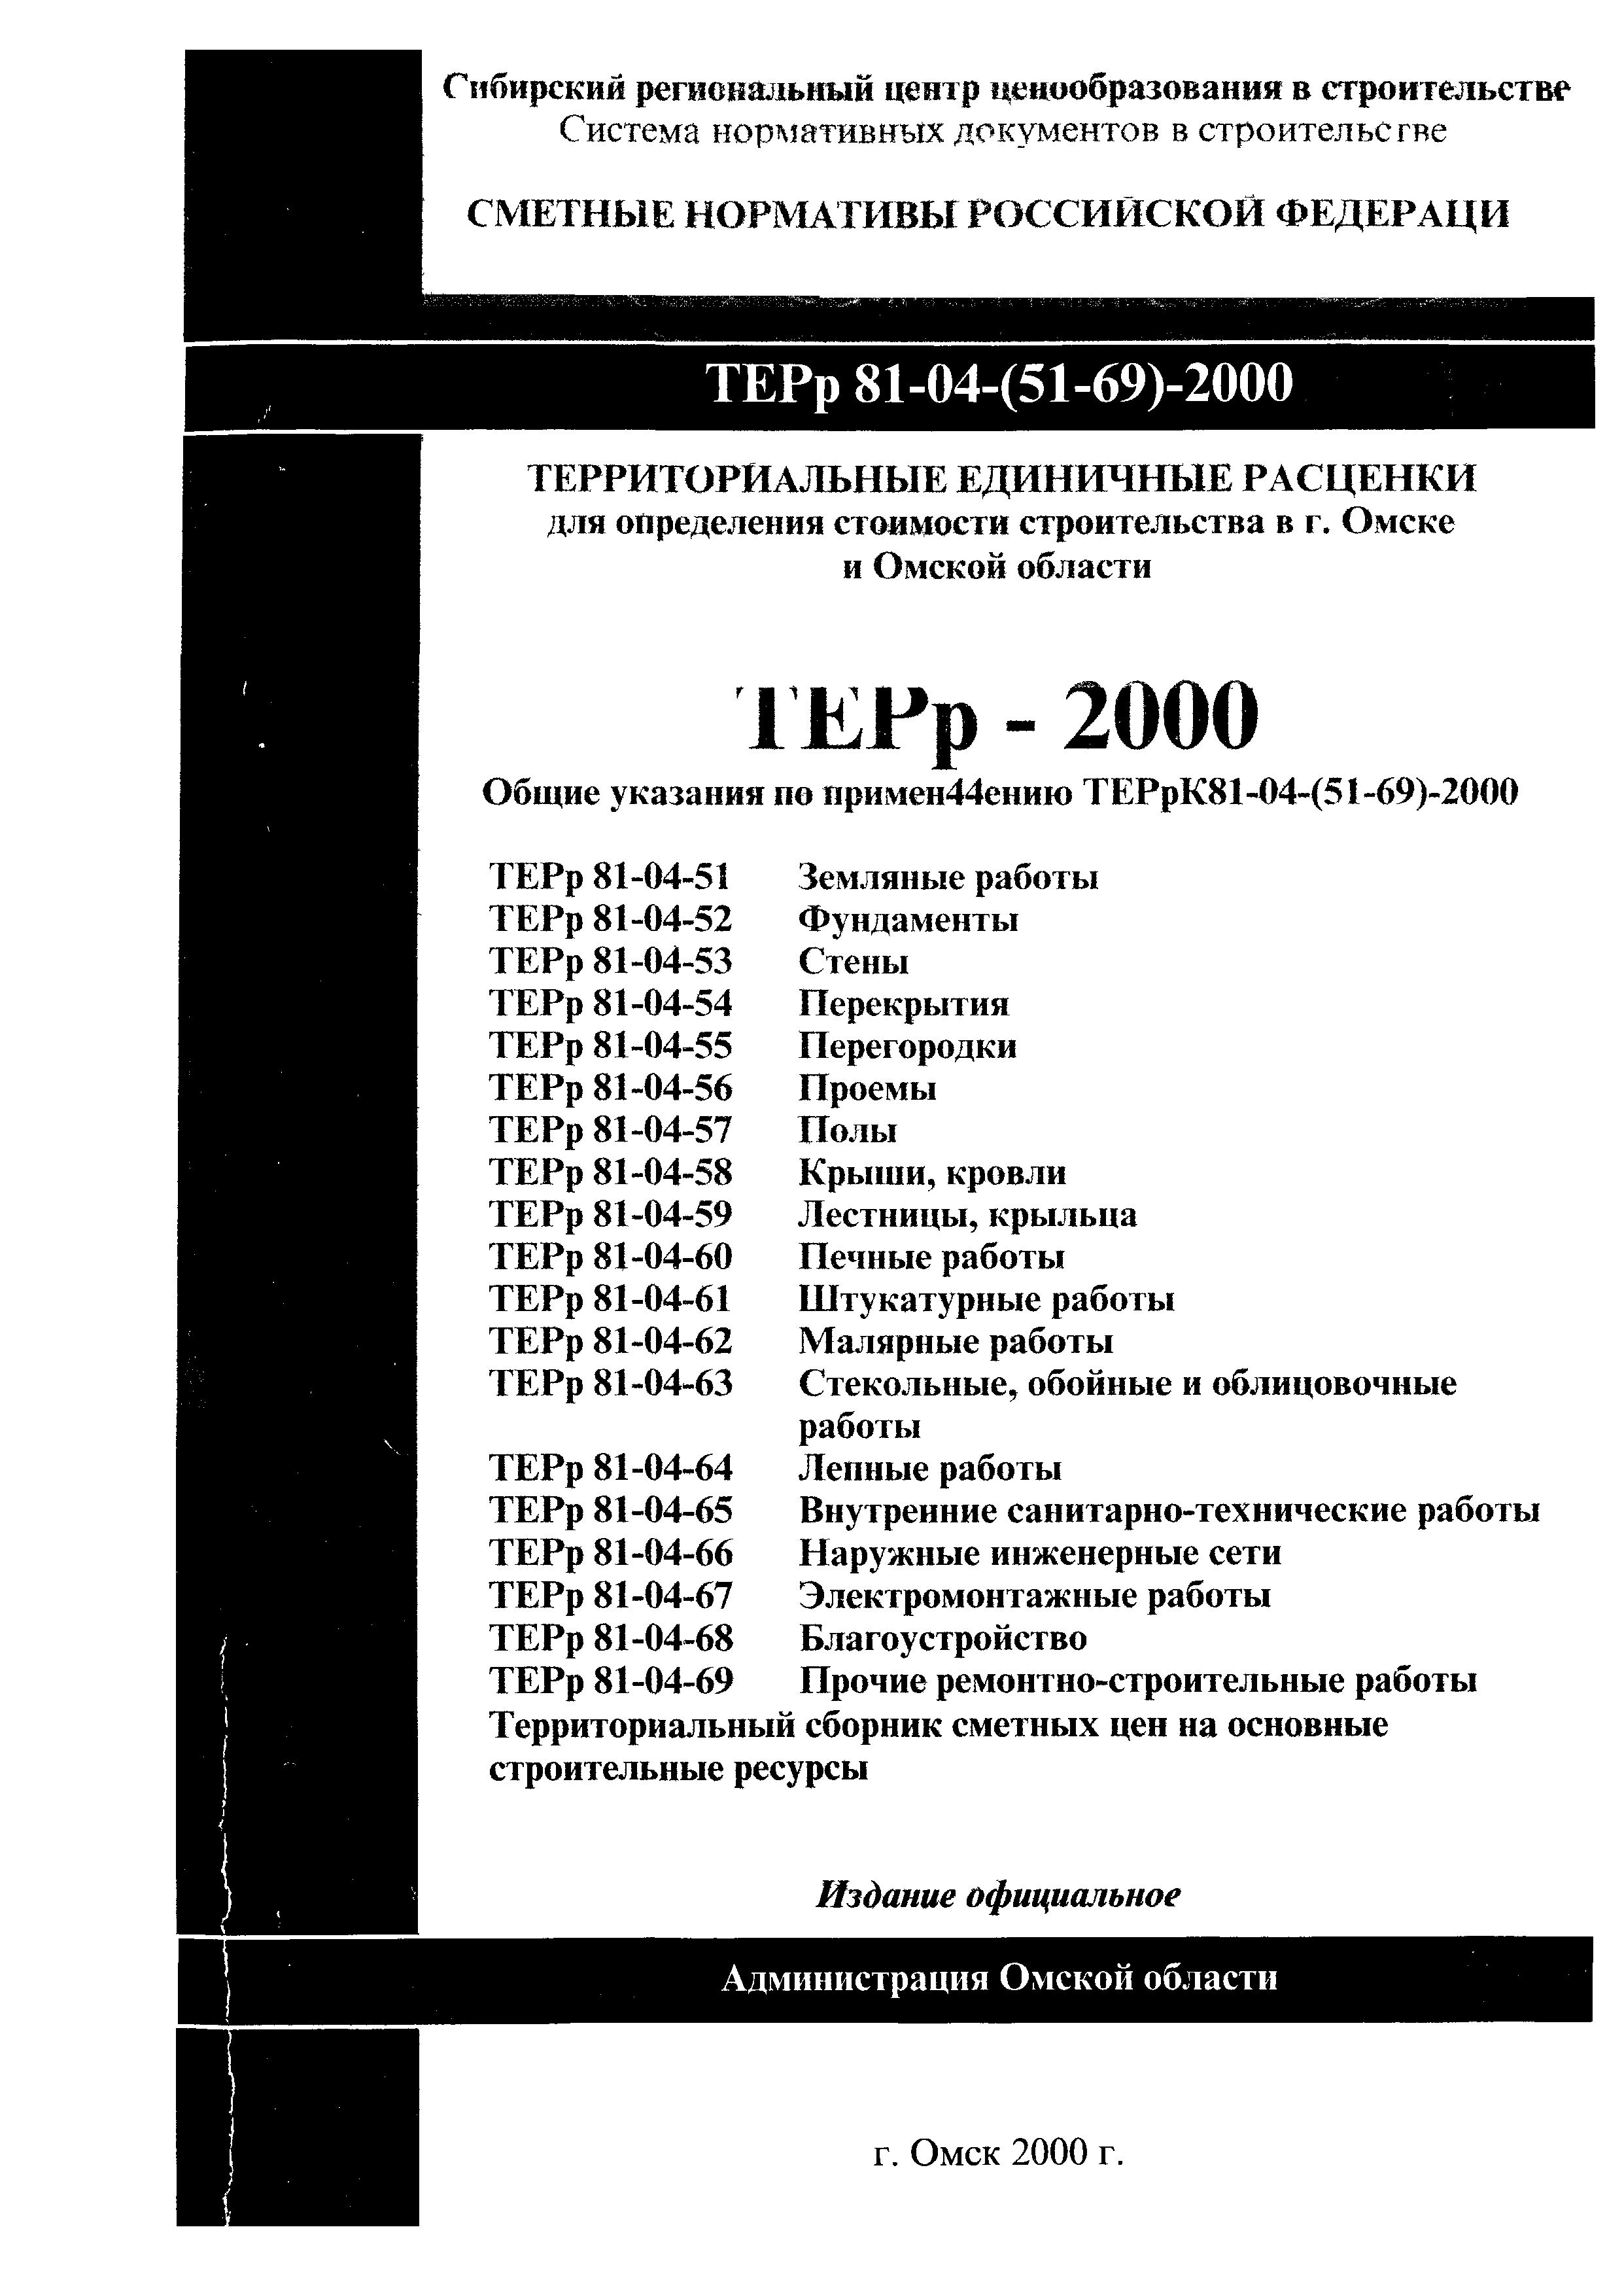 ТЕРр Омской области 2000-63